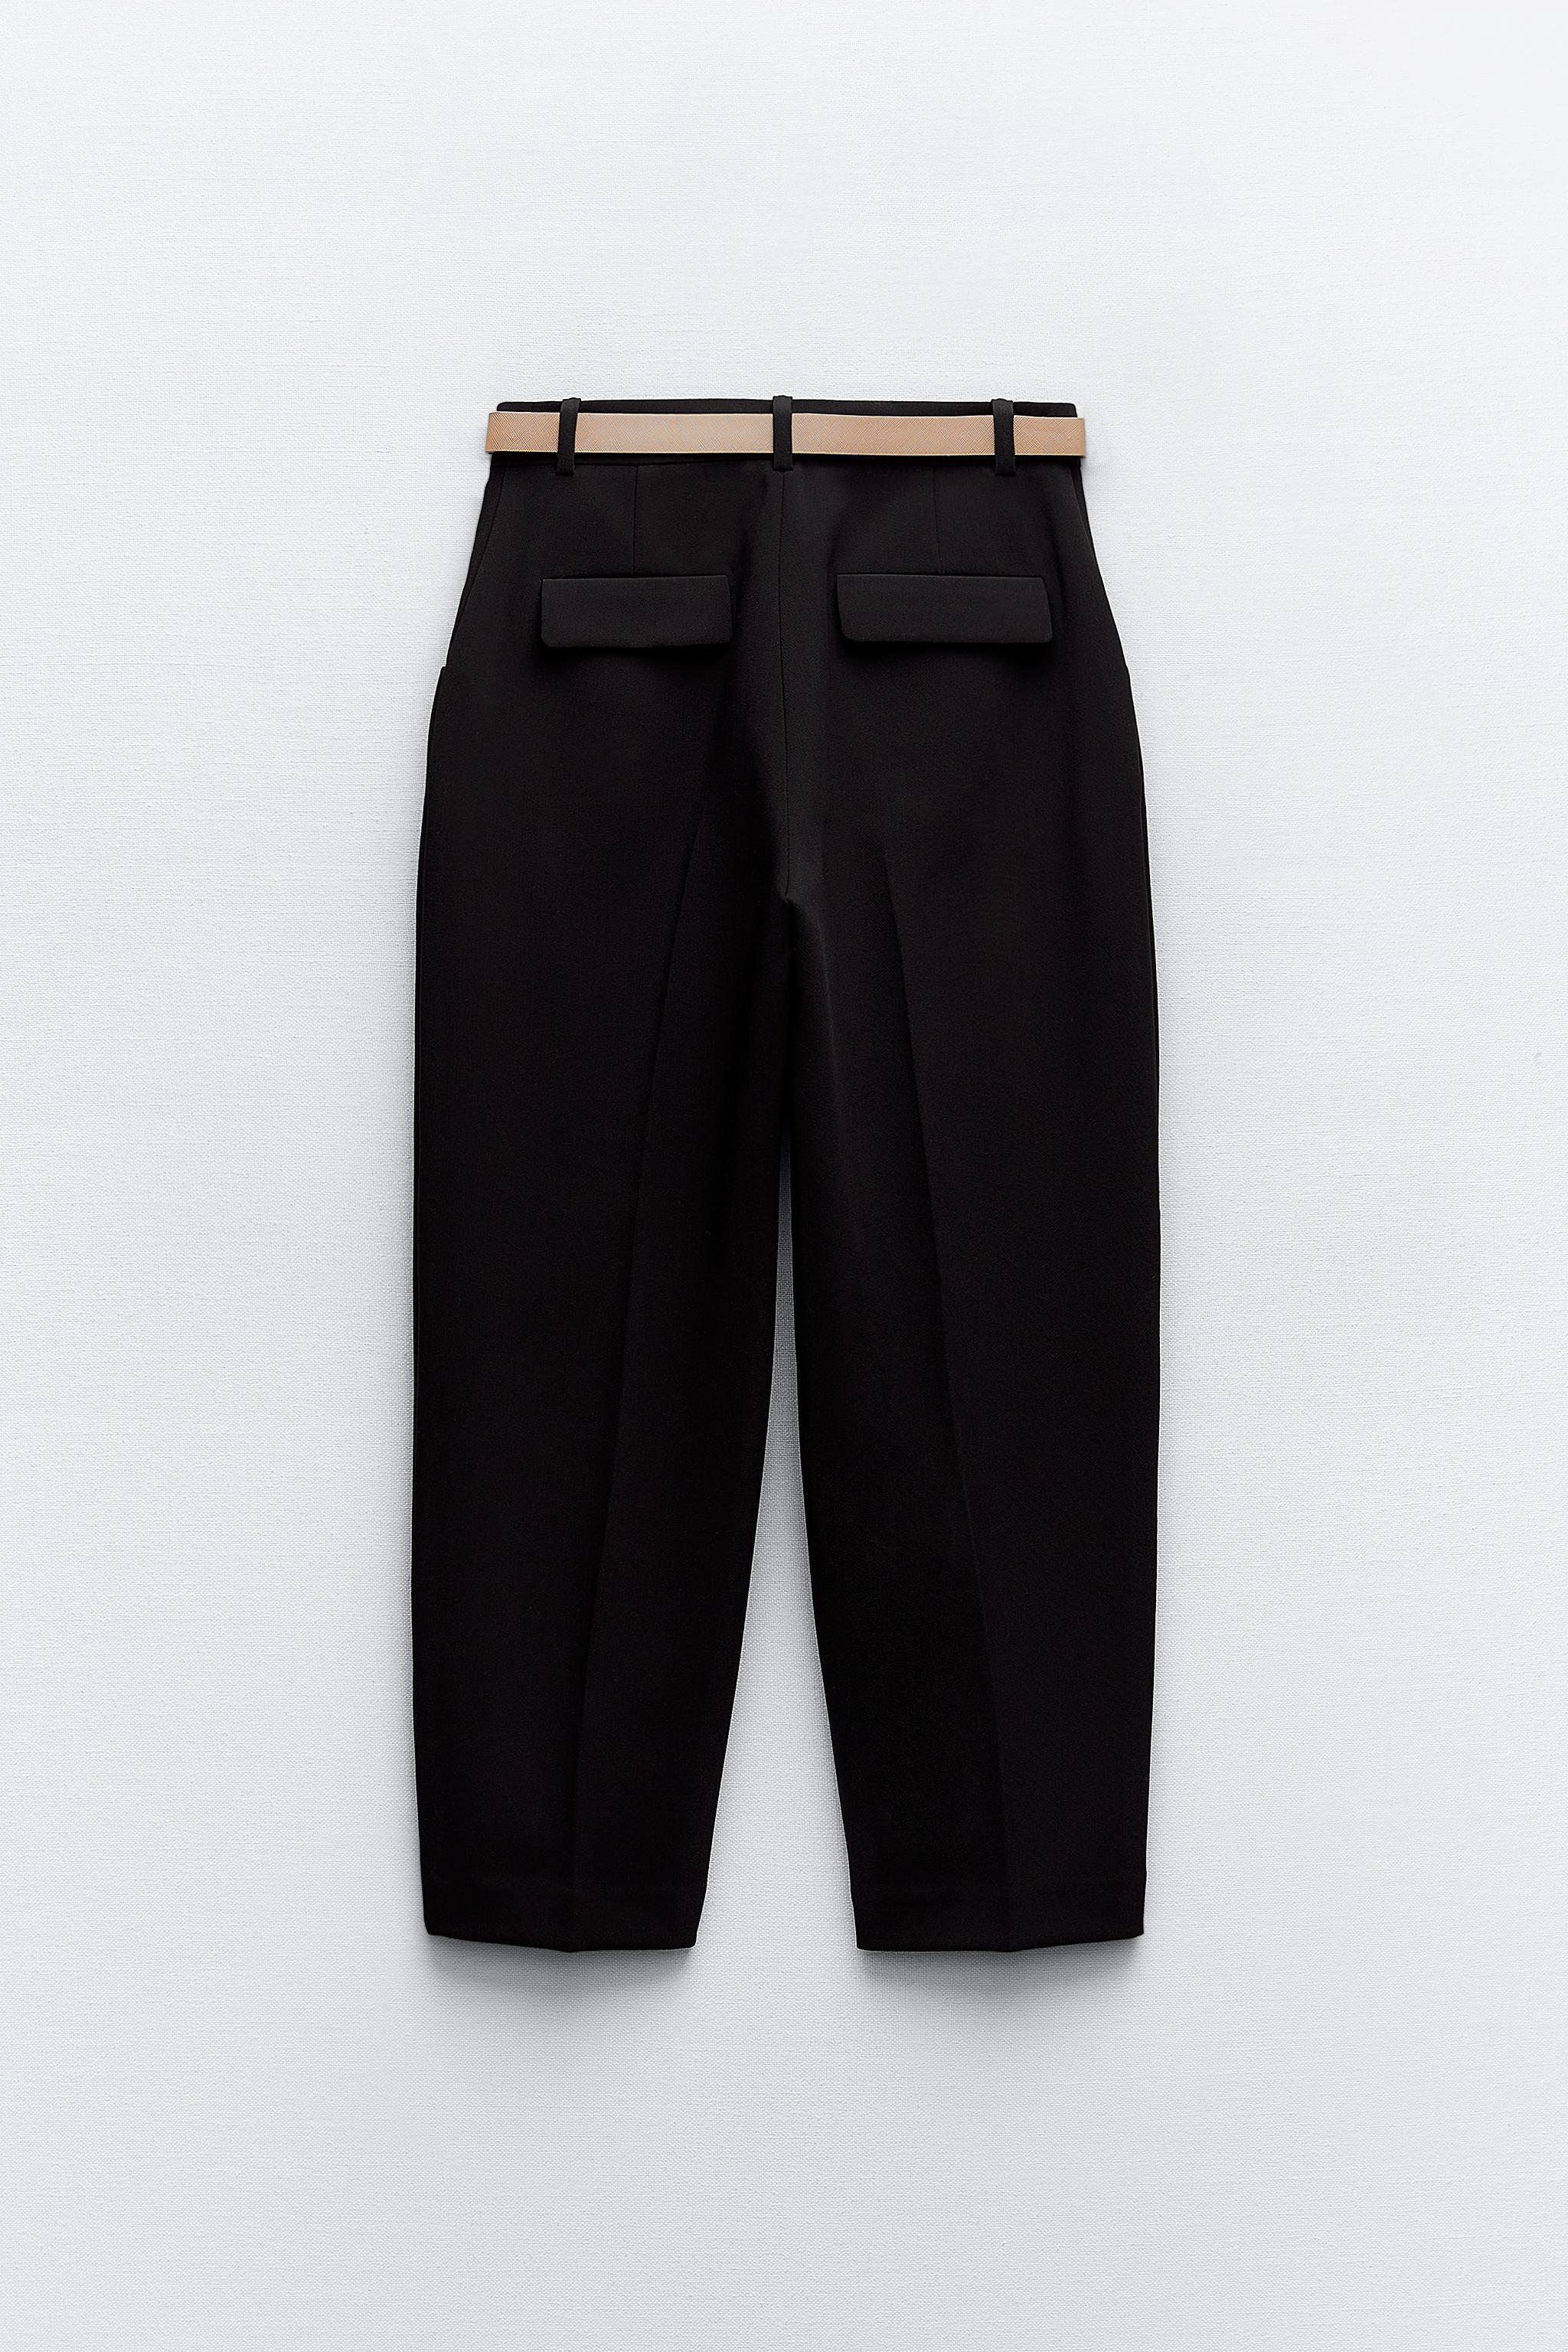 Zara Black Pants for Women